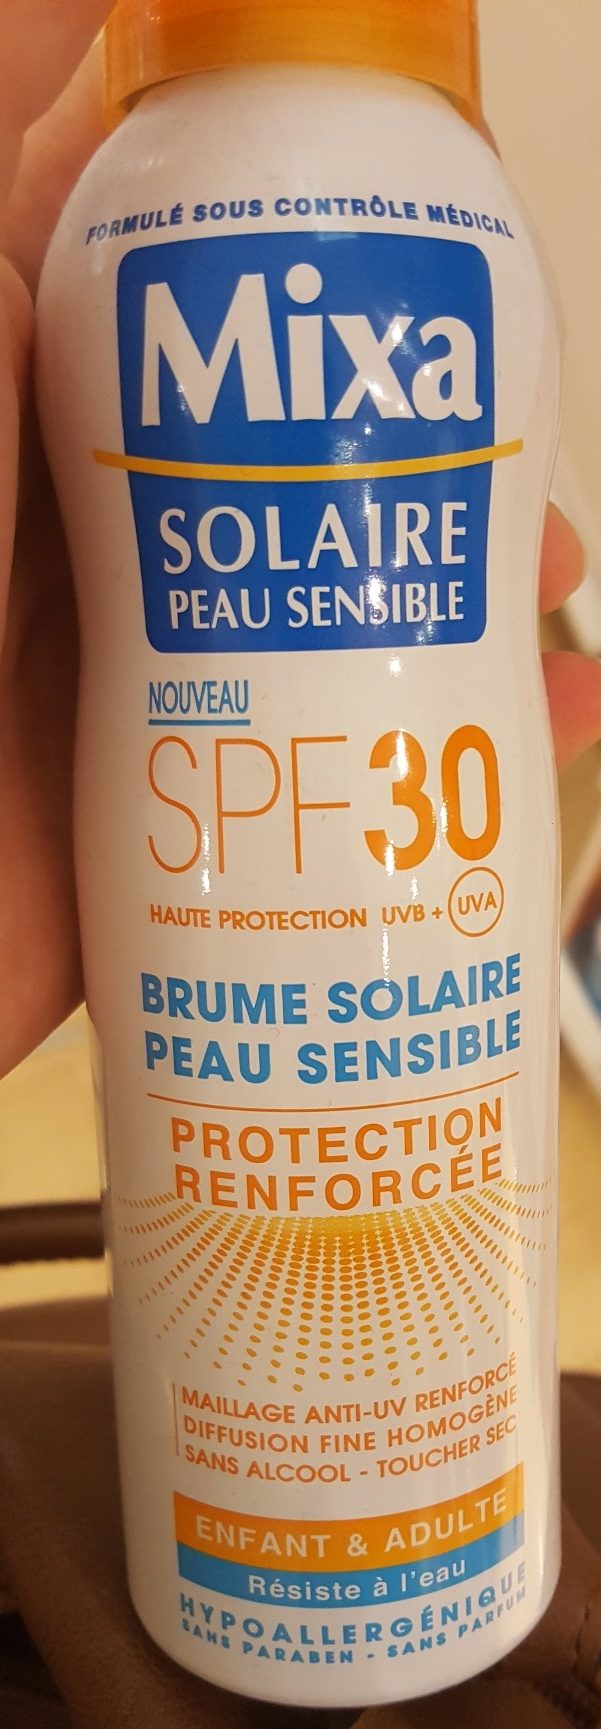 Brume Solaire Peau Sensible SPF 30 - Product - fr